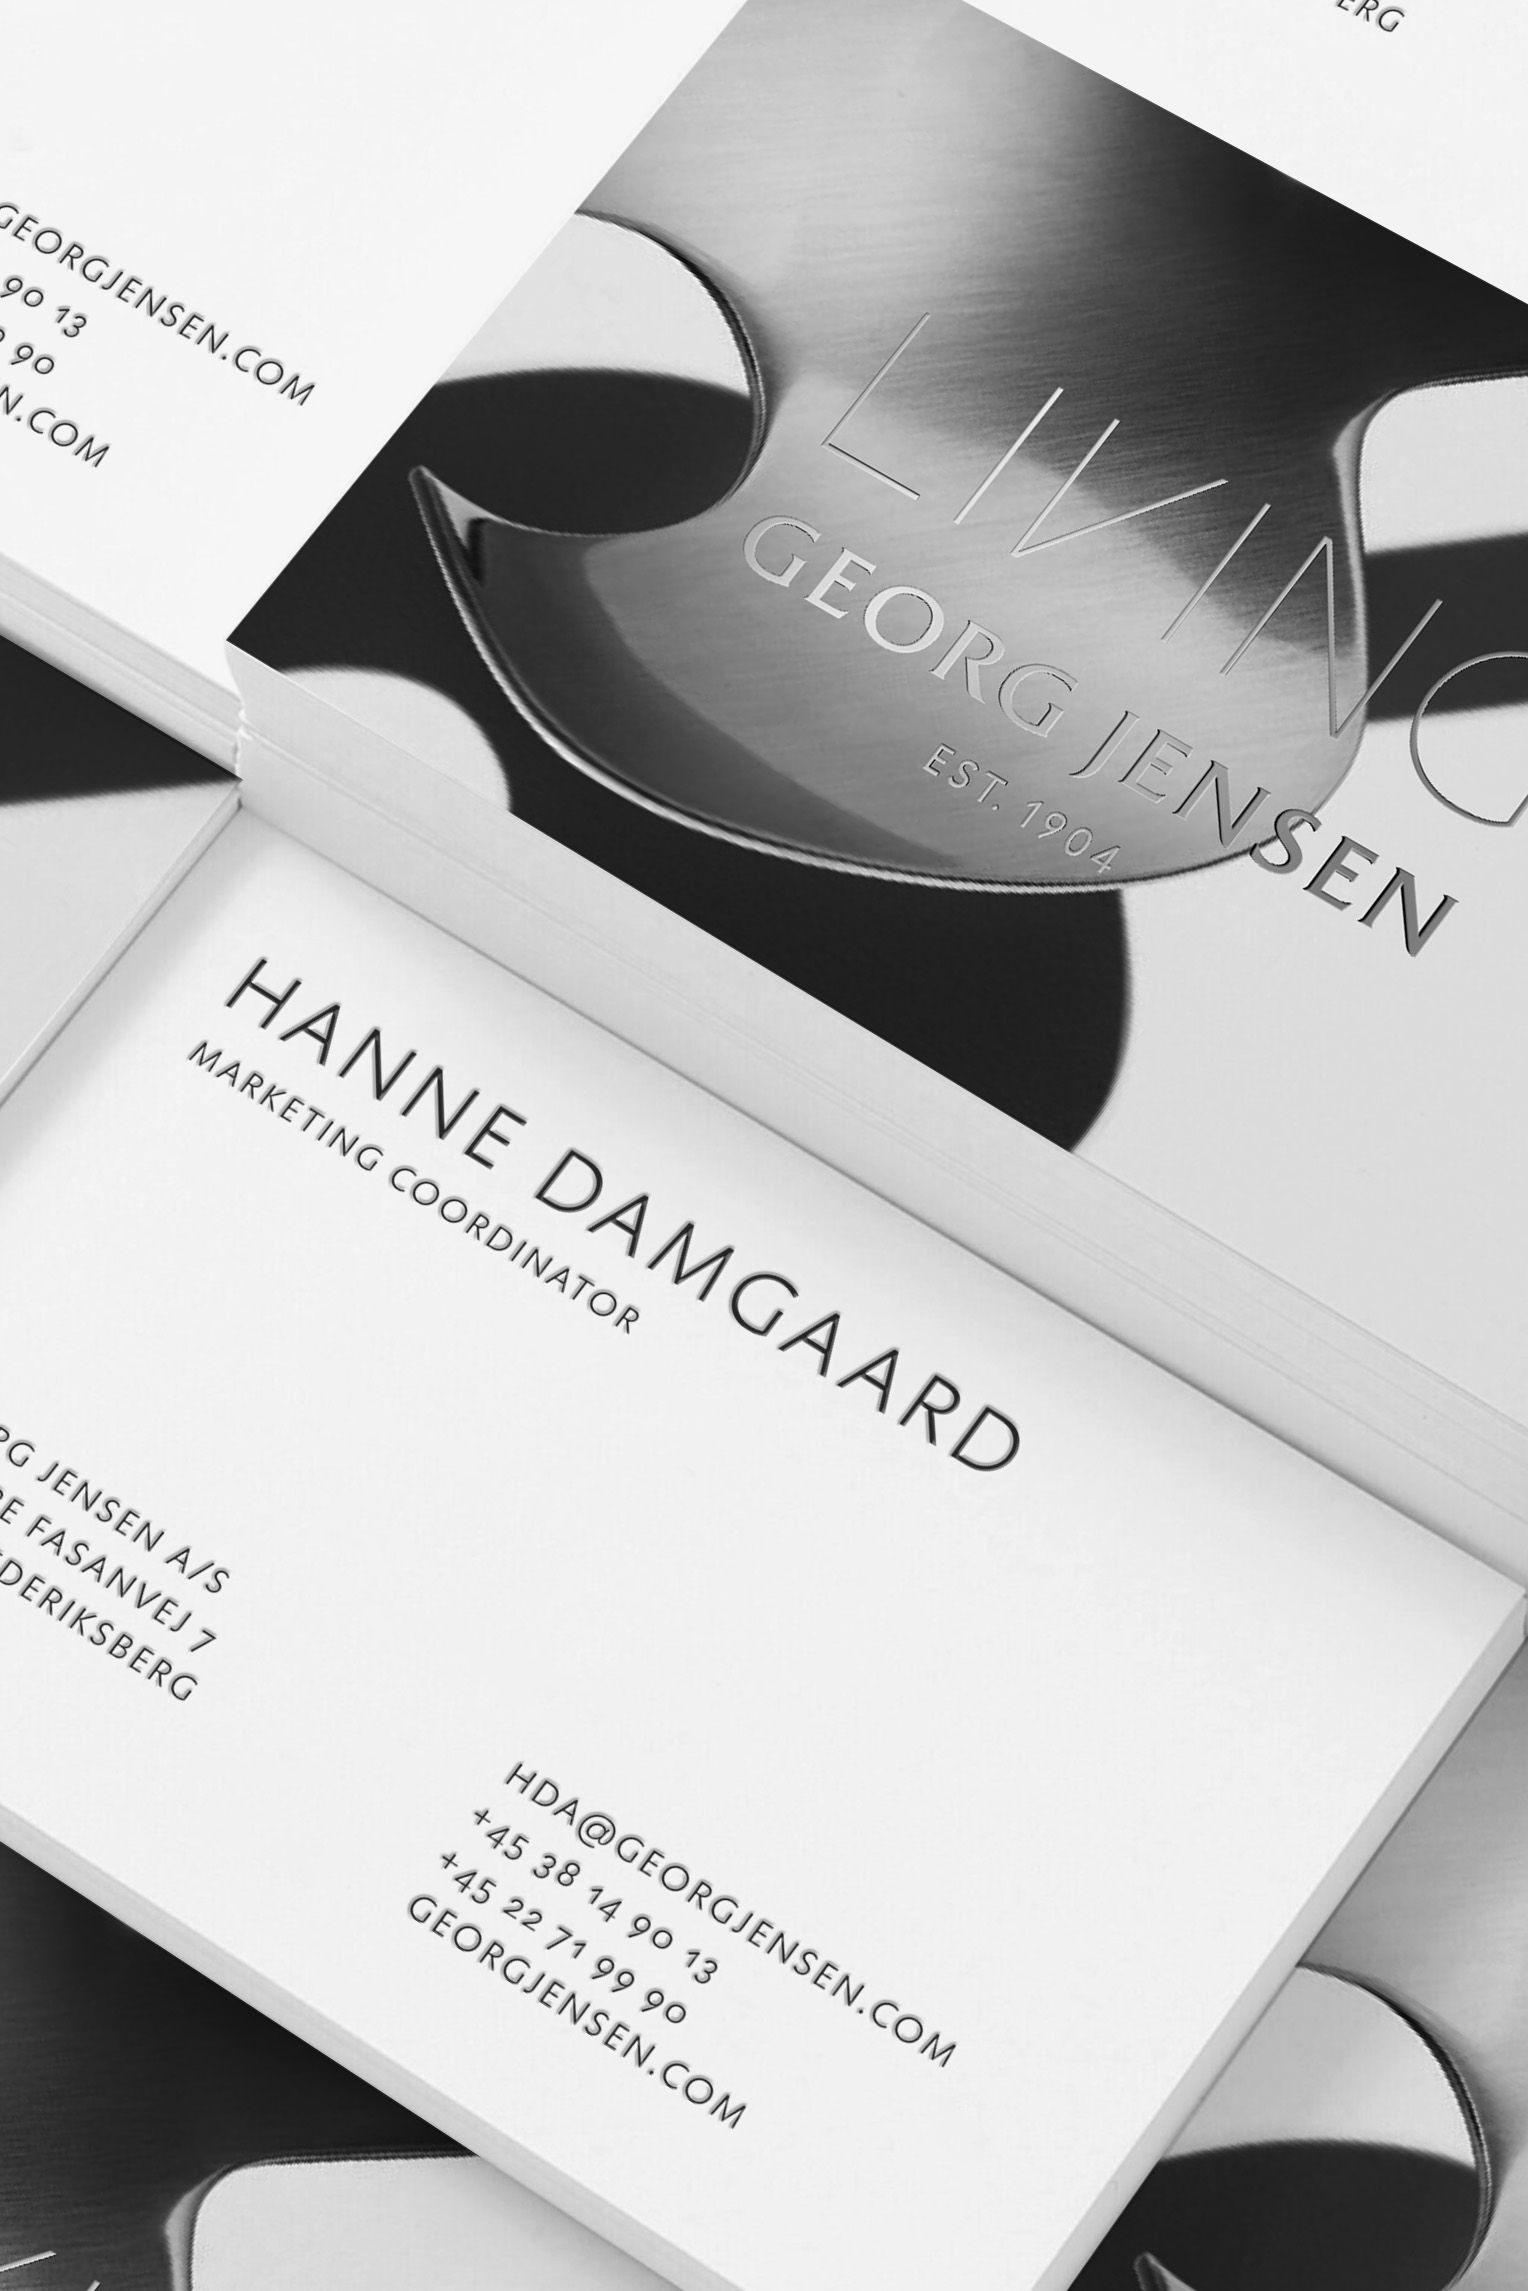 Georg Jensen Living business card designs